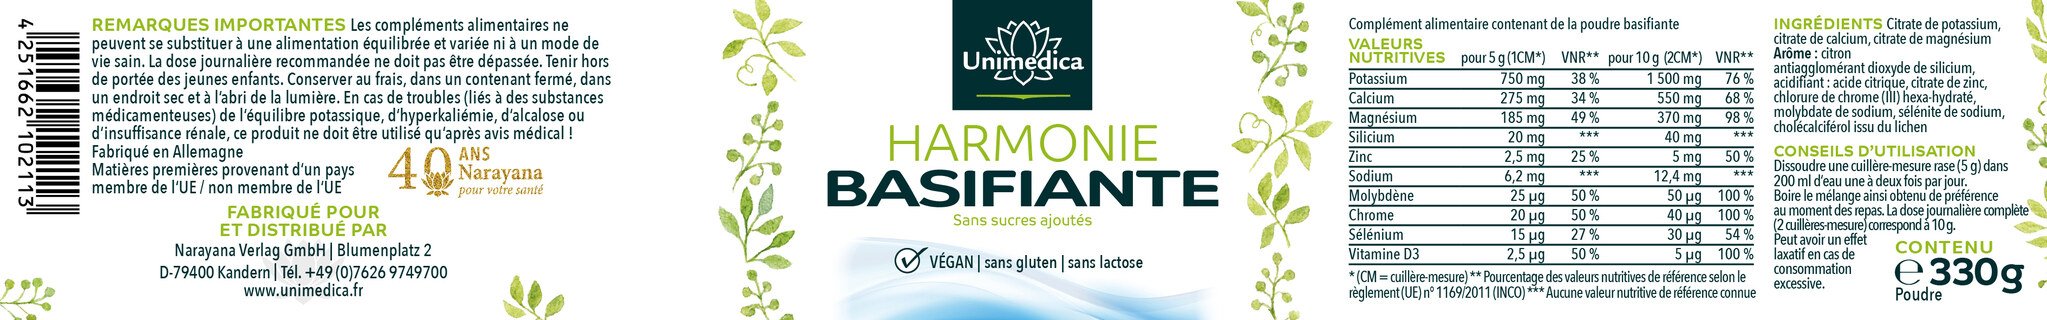 Harmonie Basifiante - 330g - par Unimedica